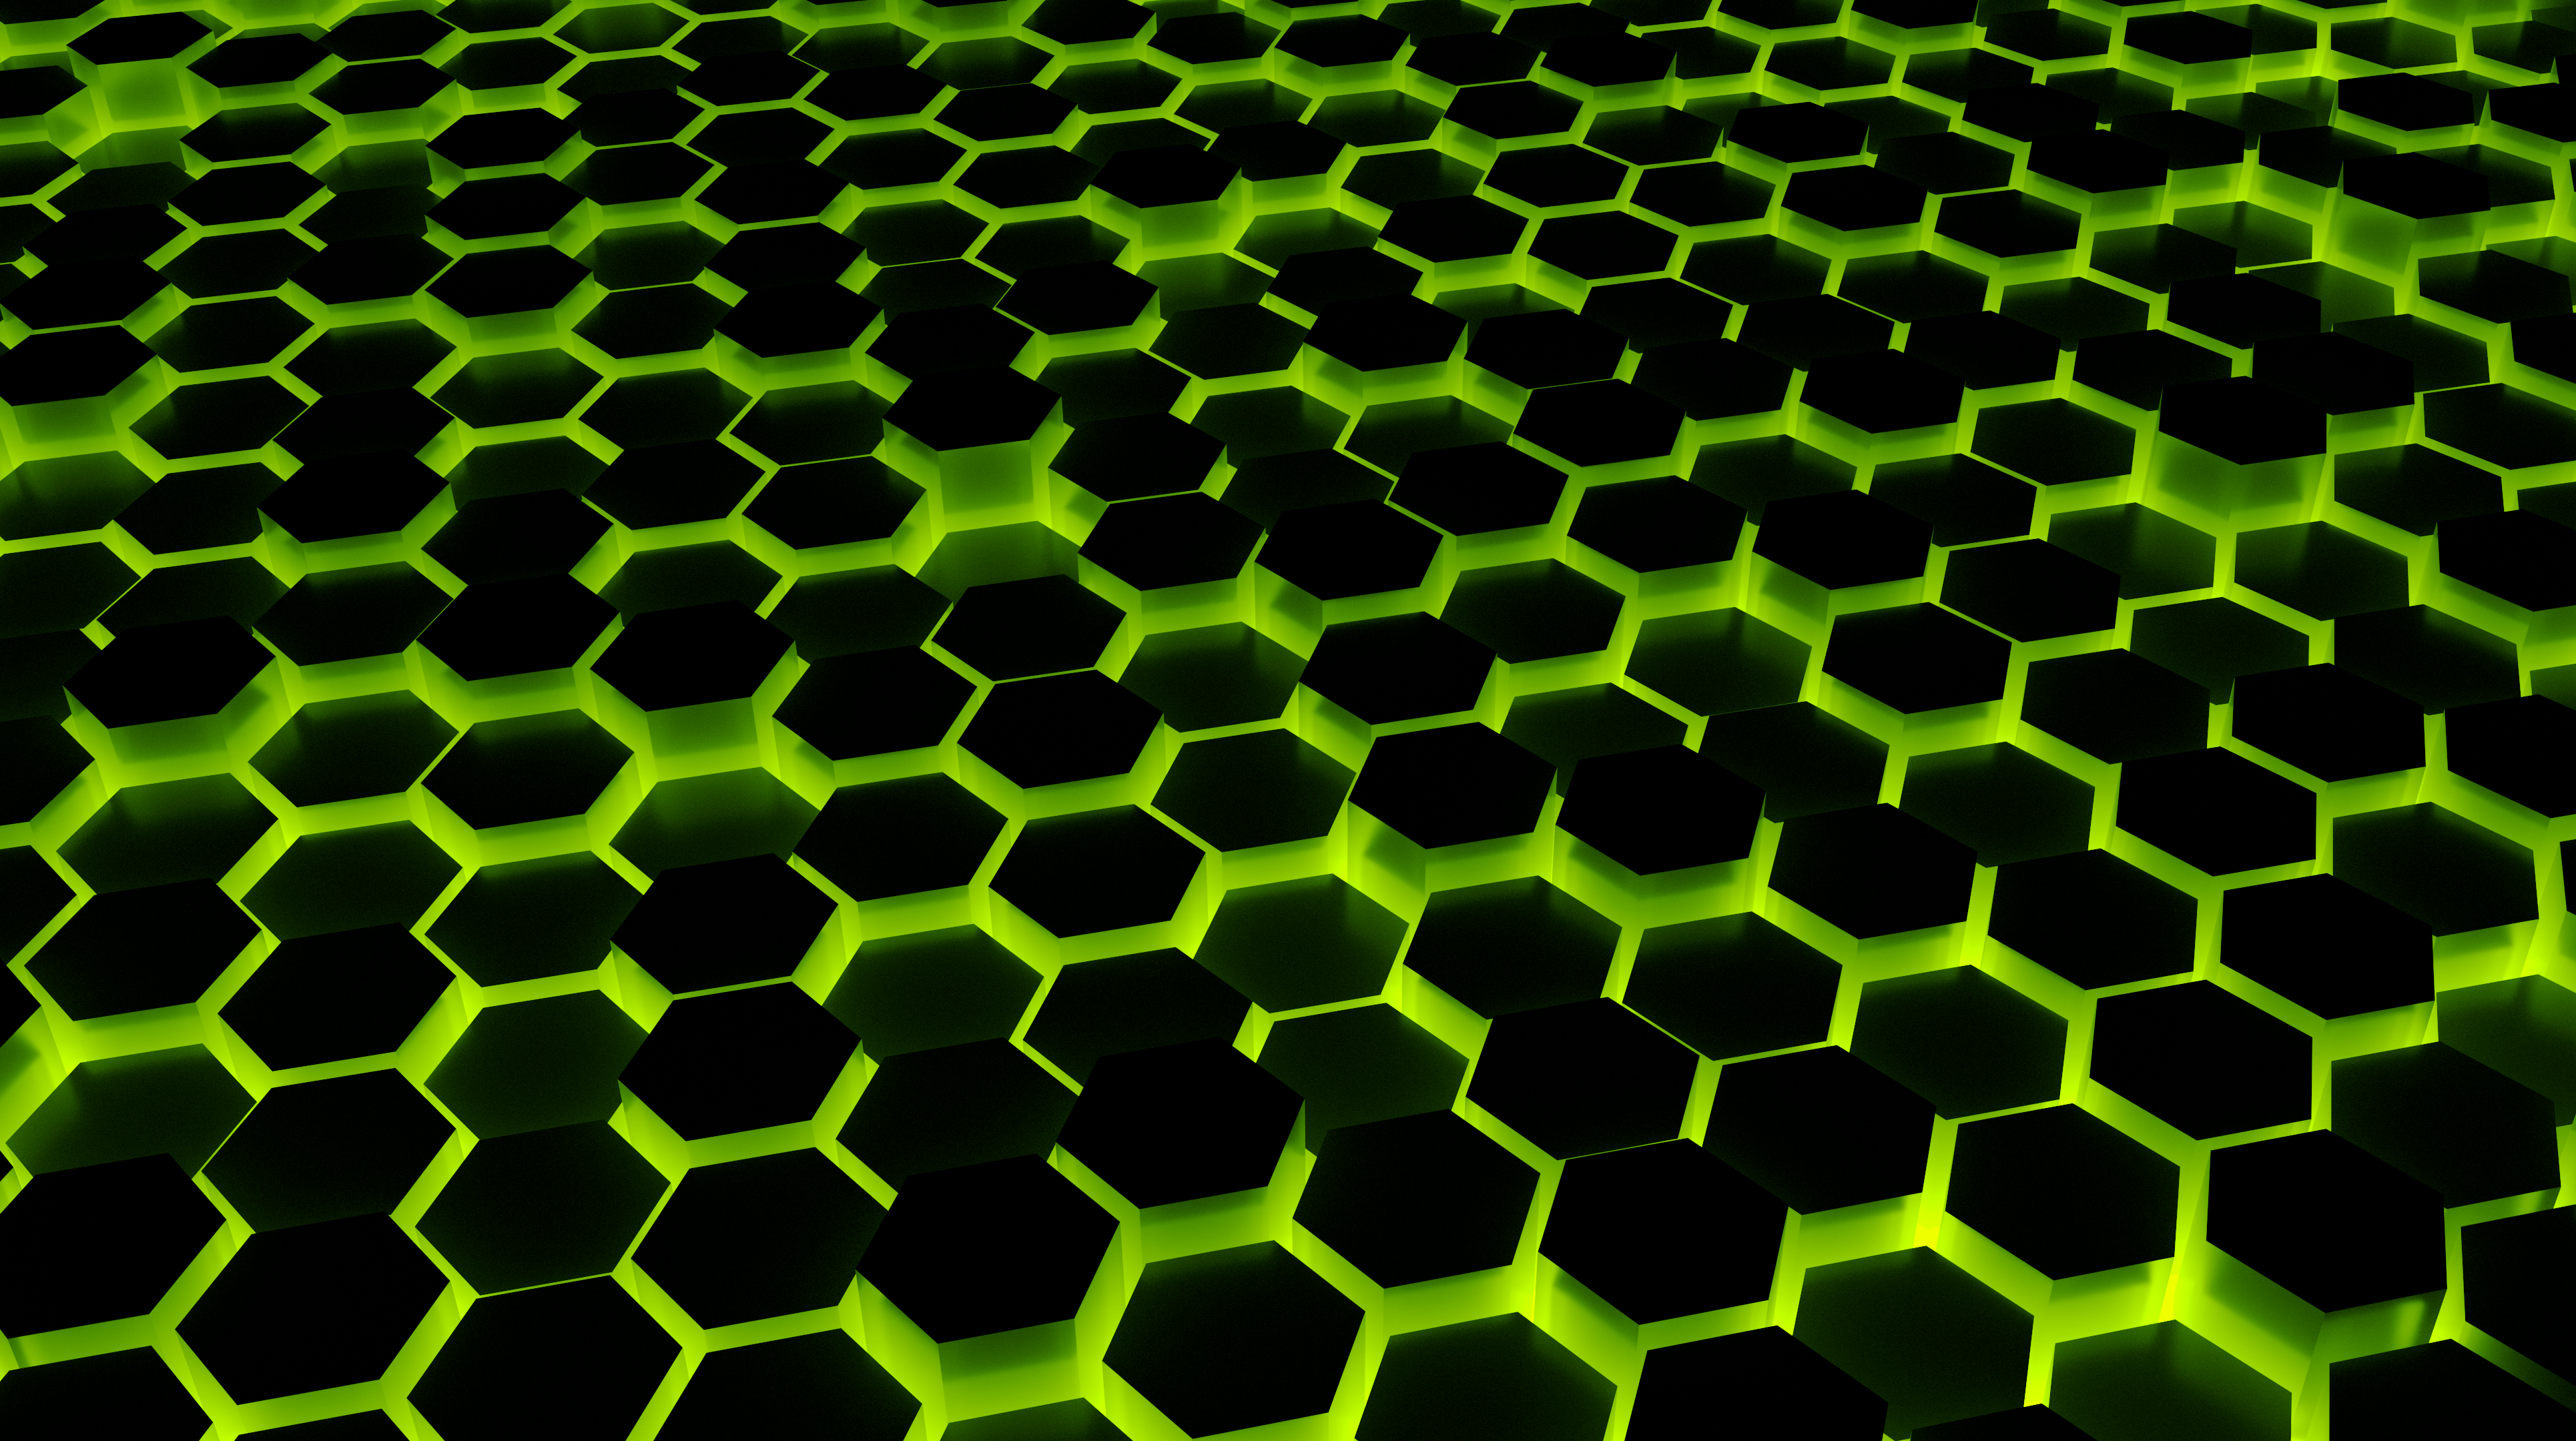 Green Hexagon Wallpaper 4k By Themusicfox On Deviantart HD Wallpapers Download Free Map Images Wallpaper [wallpaper684.blogspot.com]